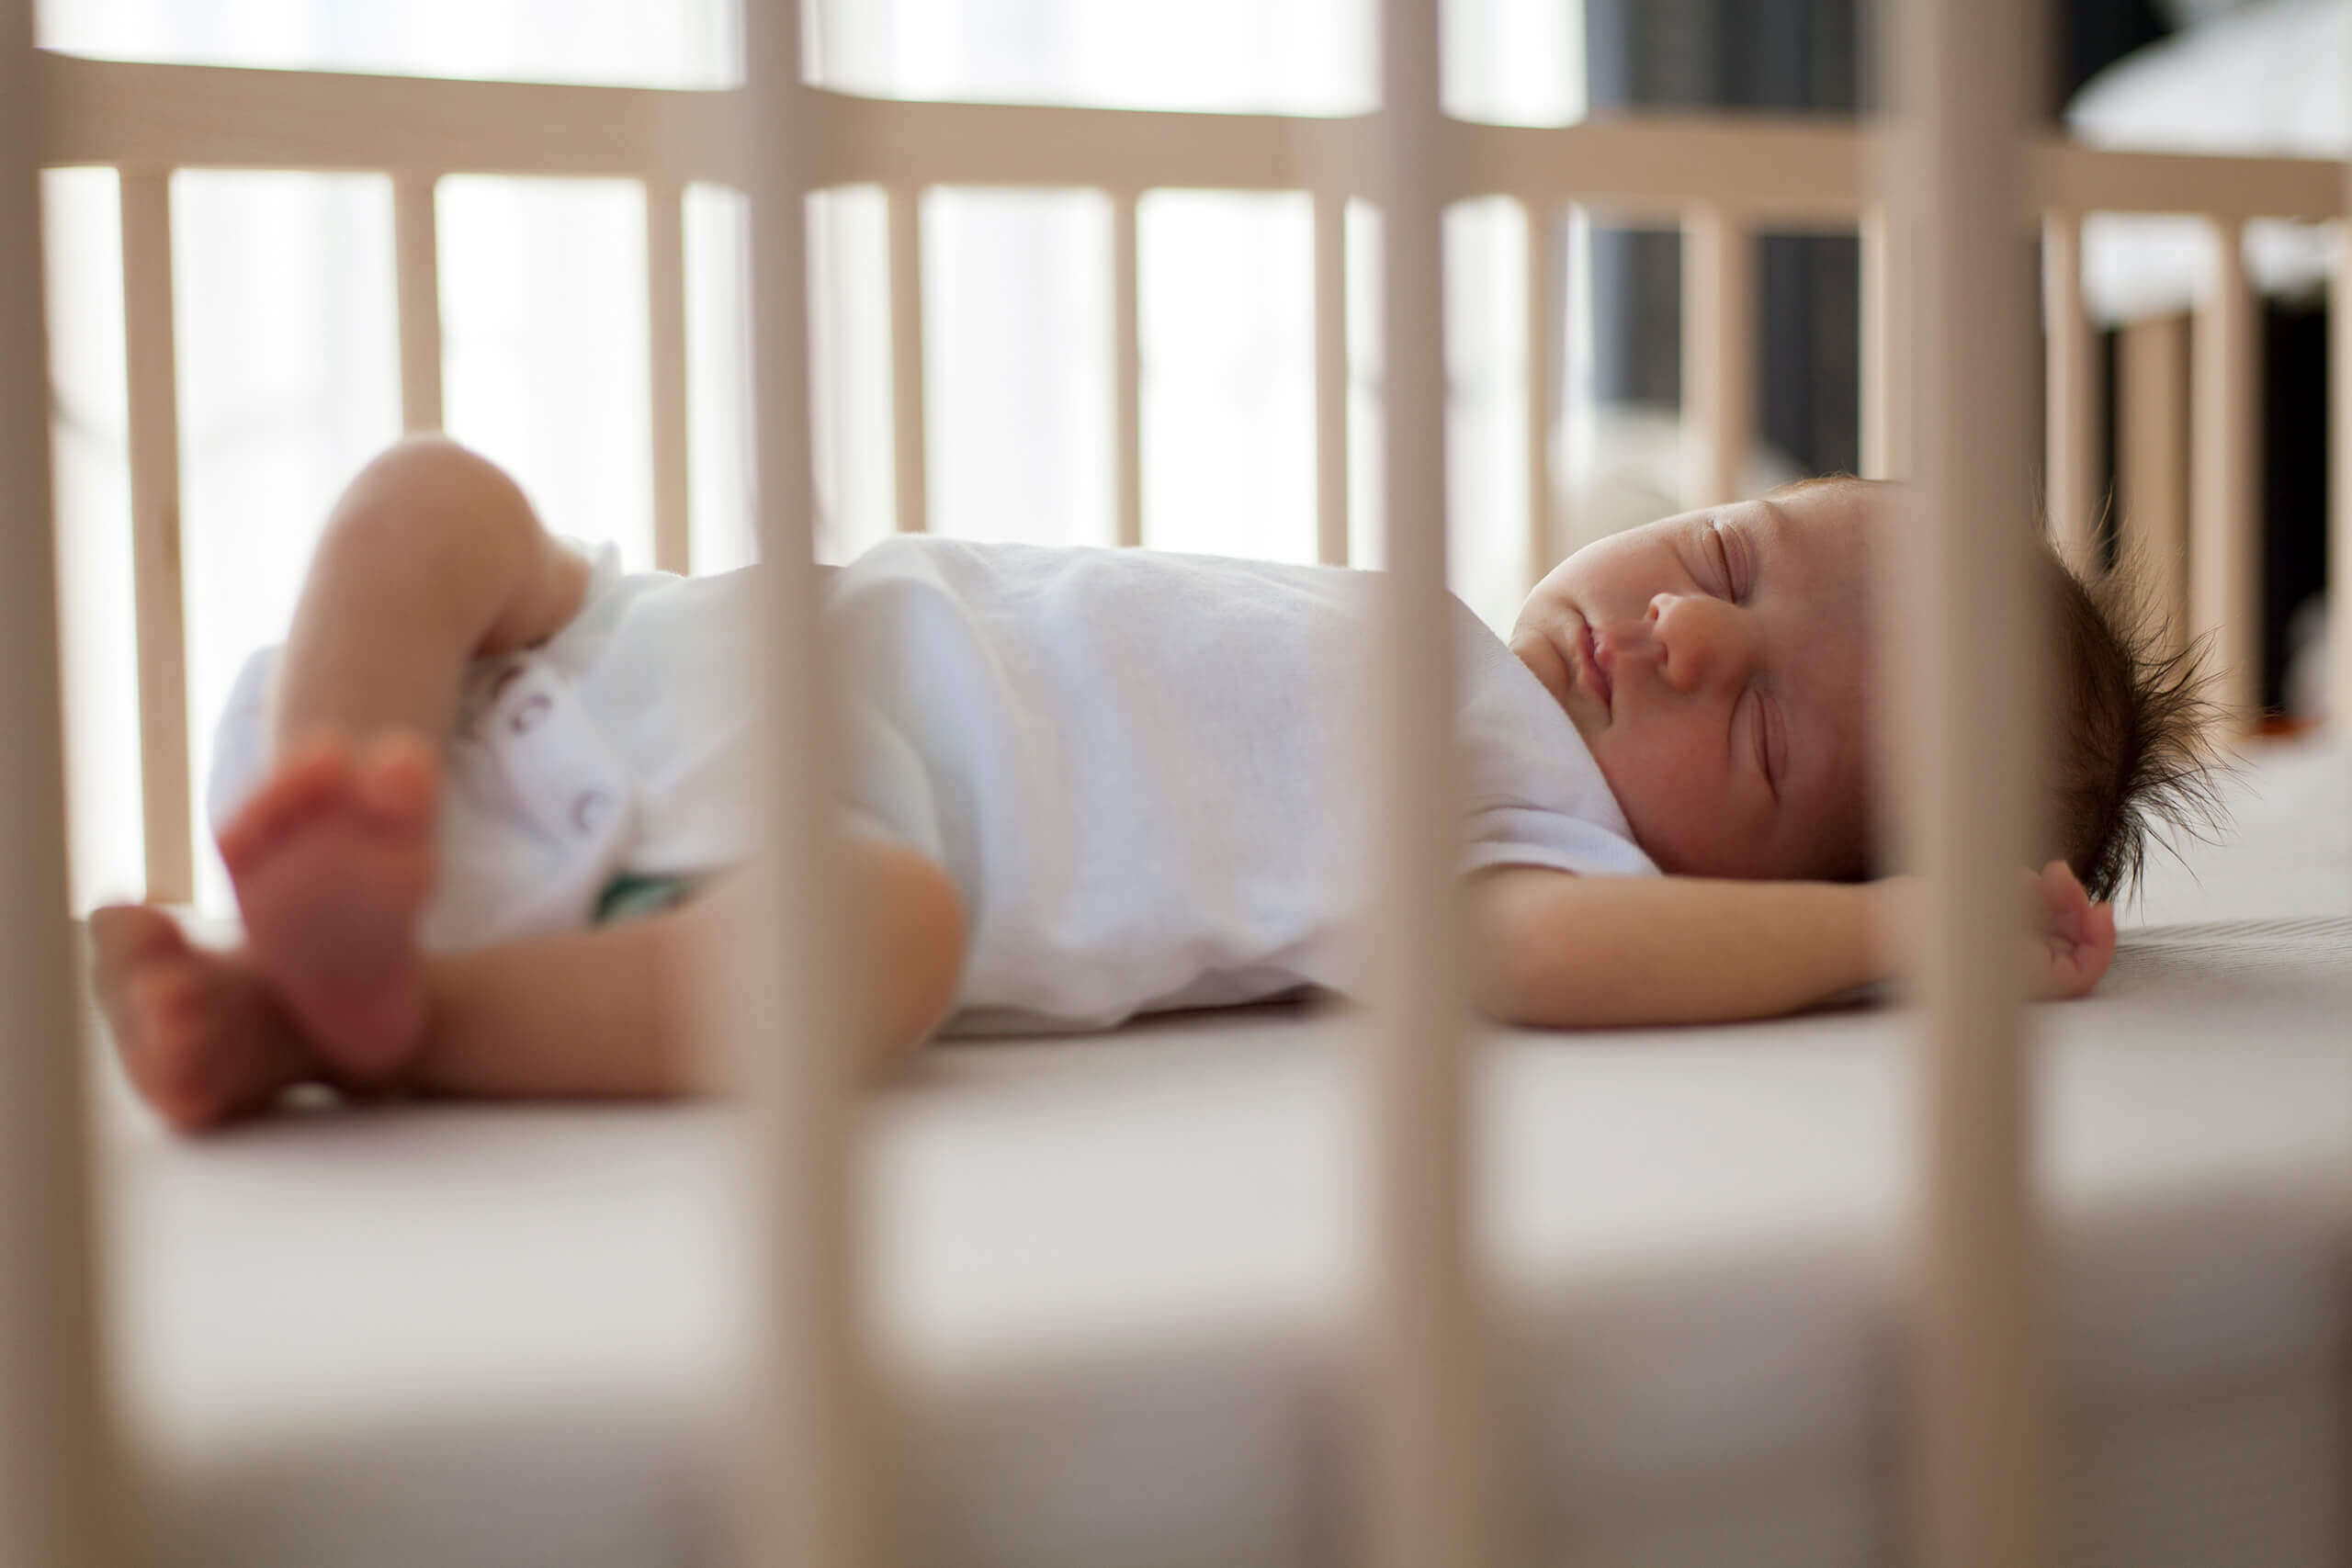 Showing a newborn baby in a crib.